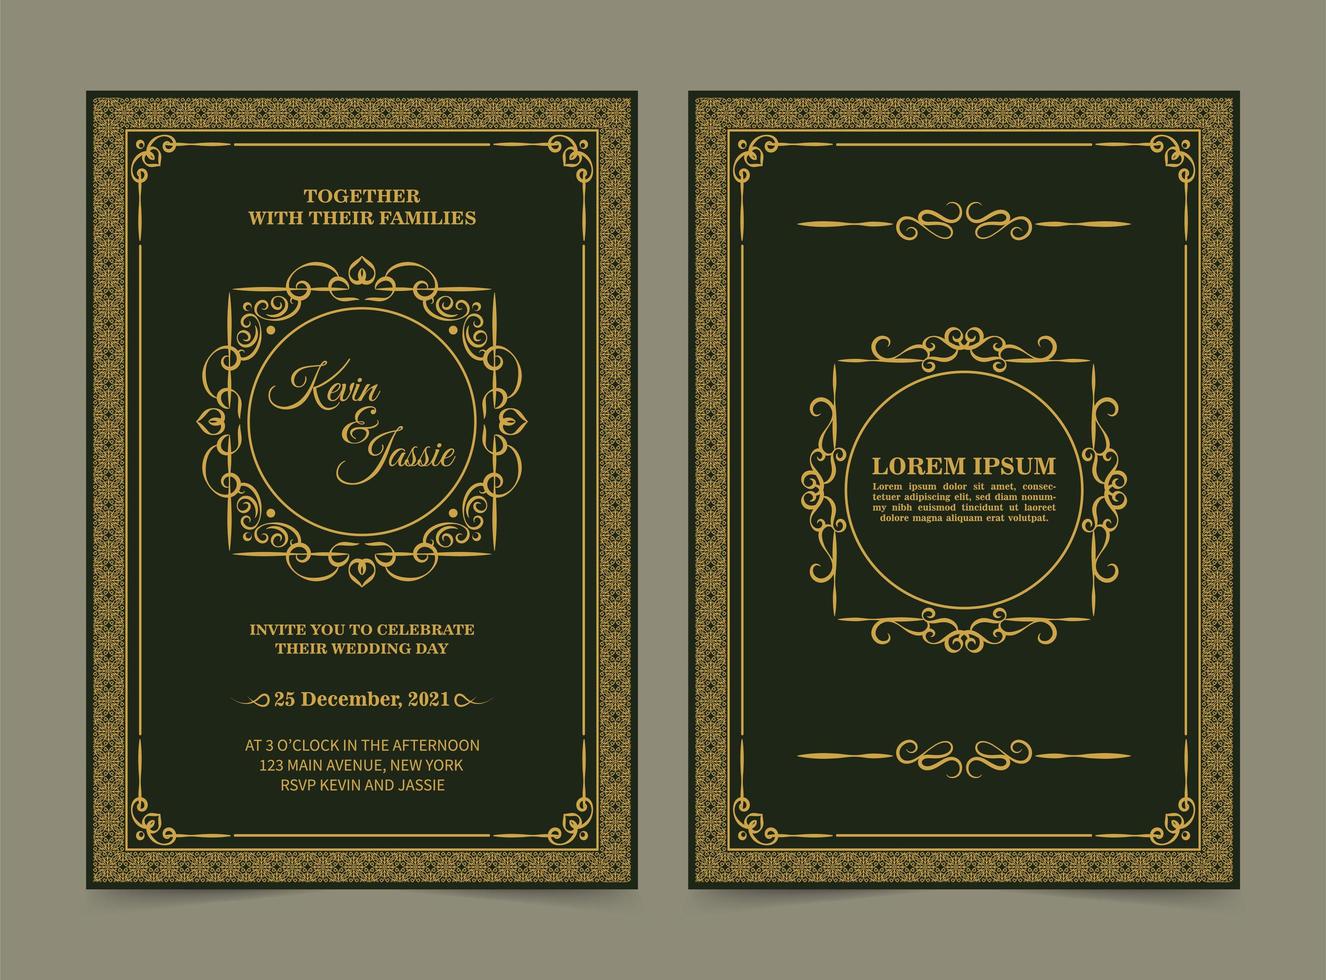 Elegant classic wedding invitation card vector